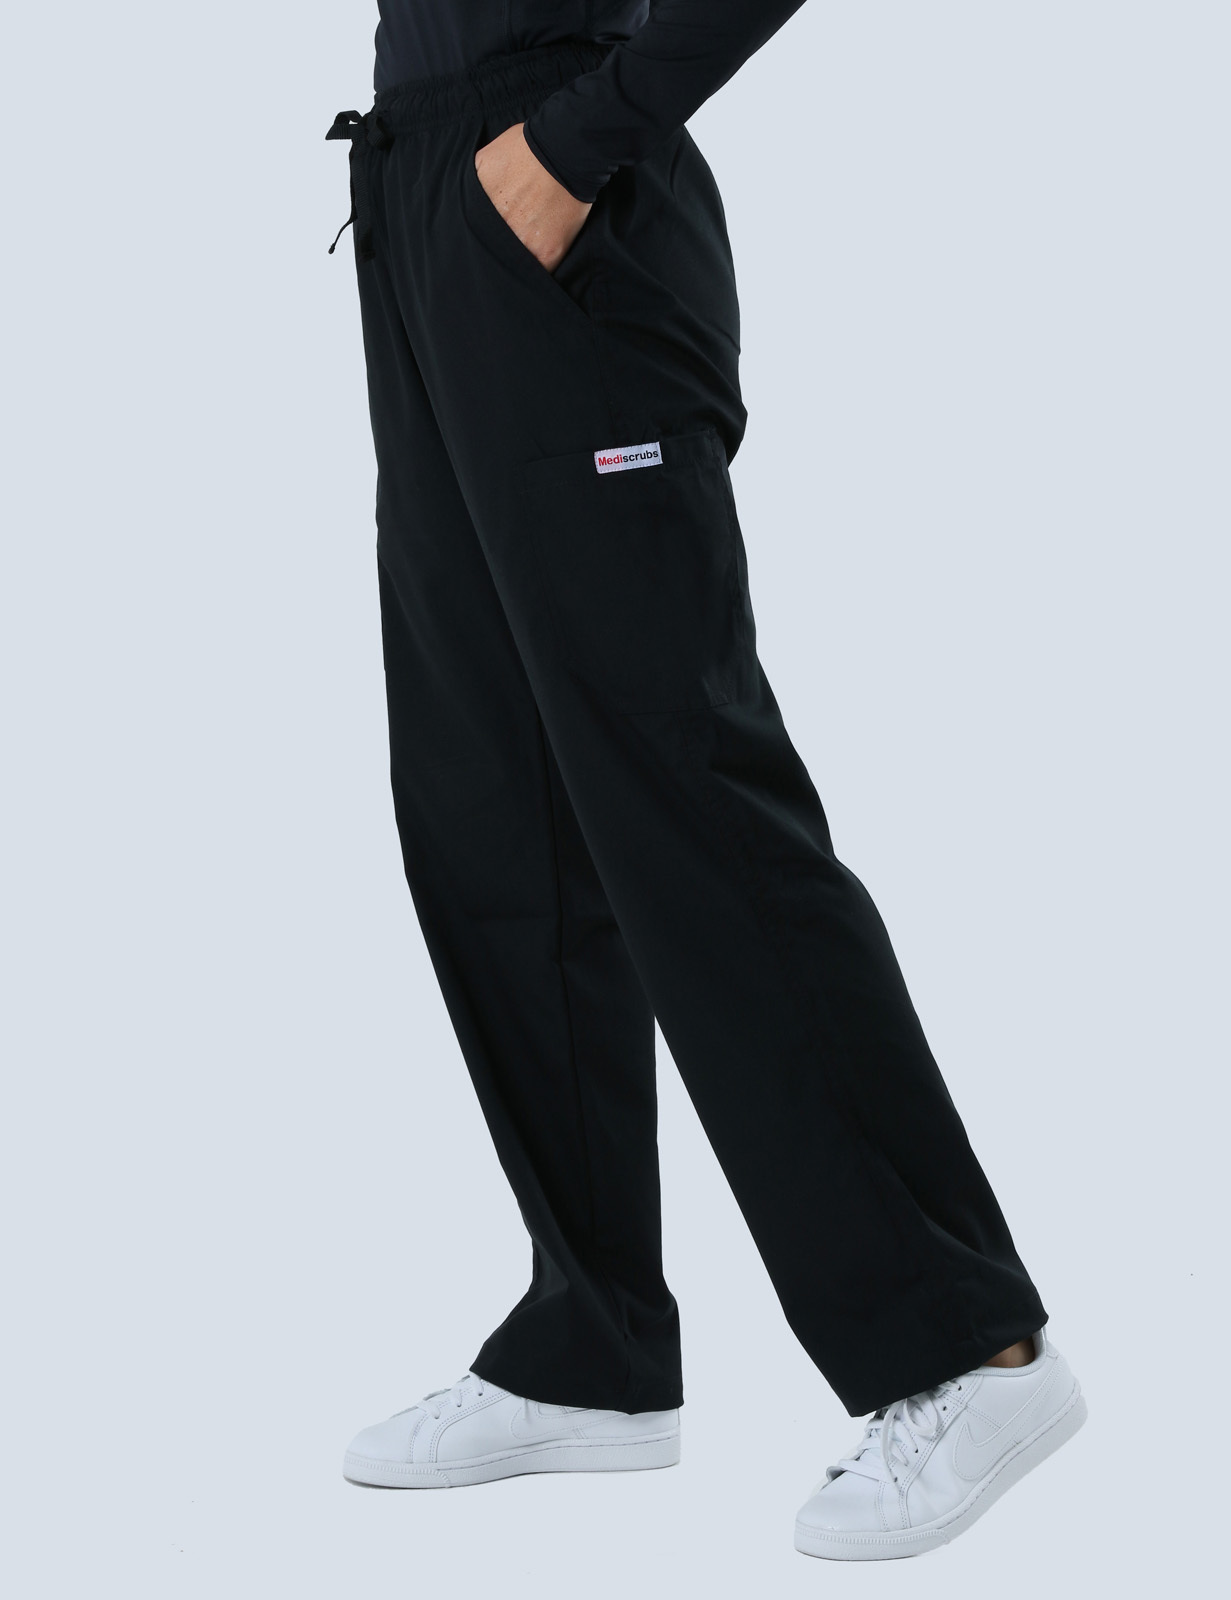 Women's Cargo Performance Pants - Black - 4X large